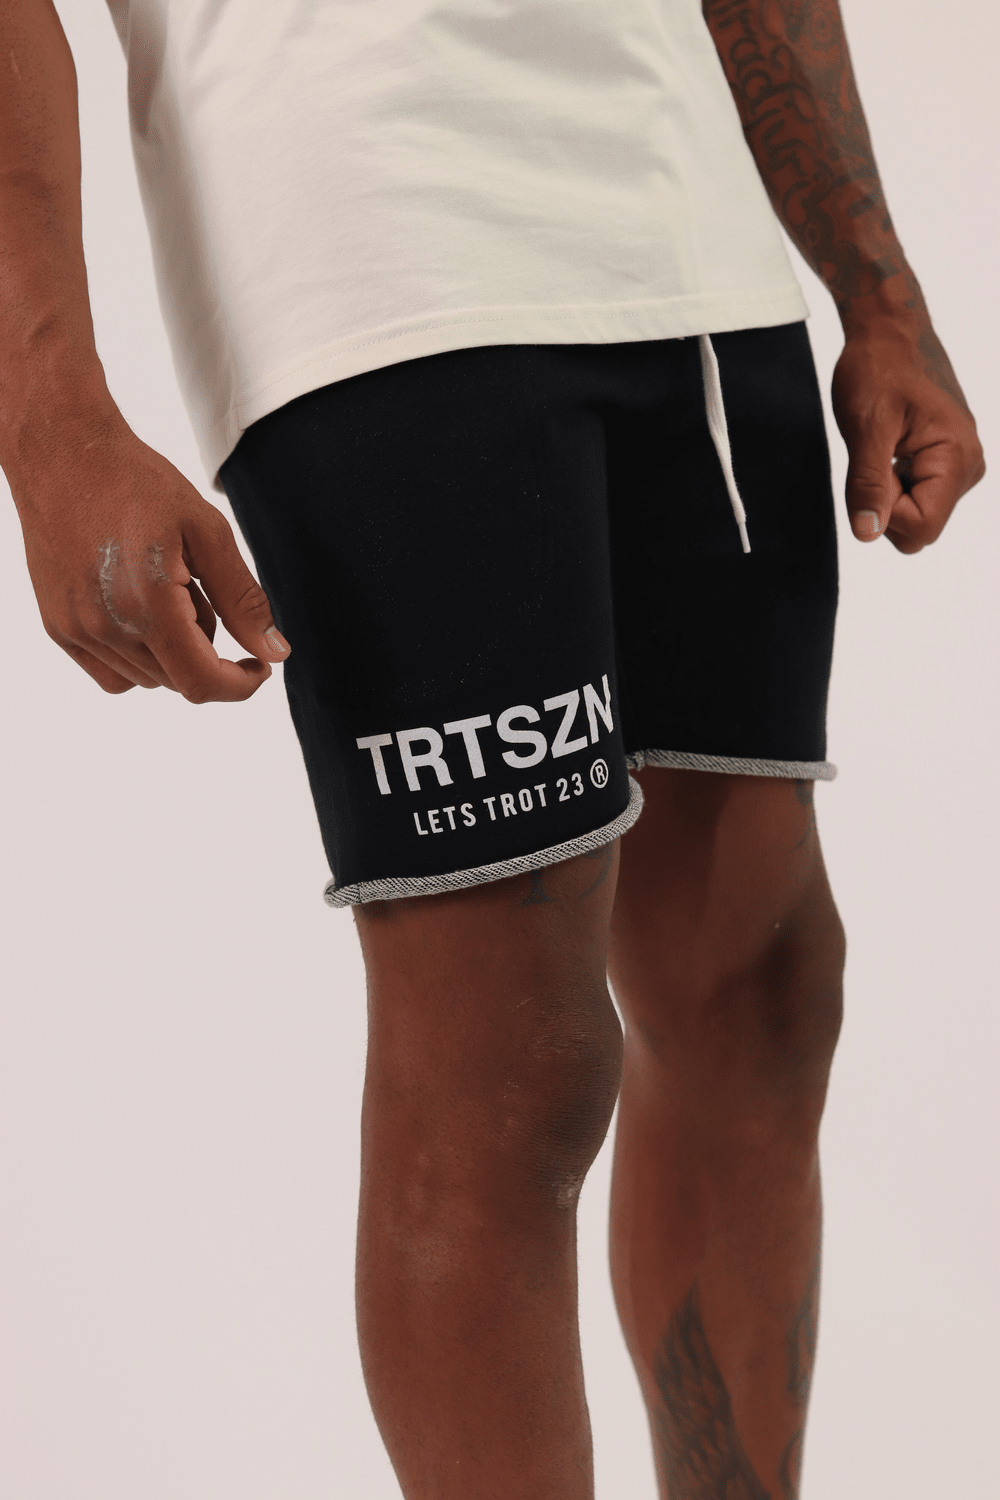 TRT SZN Shorts (Black)